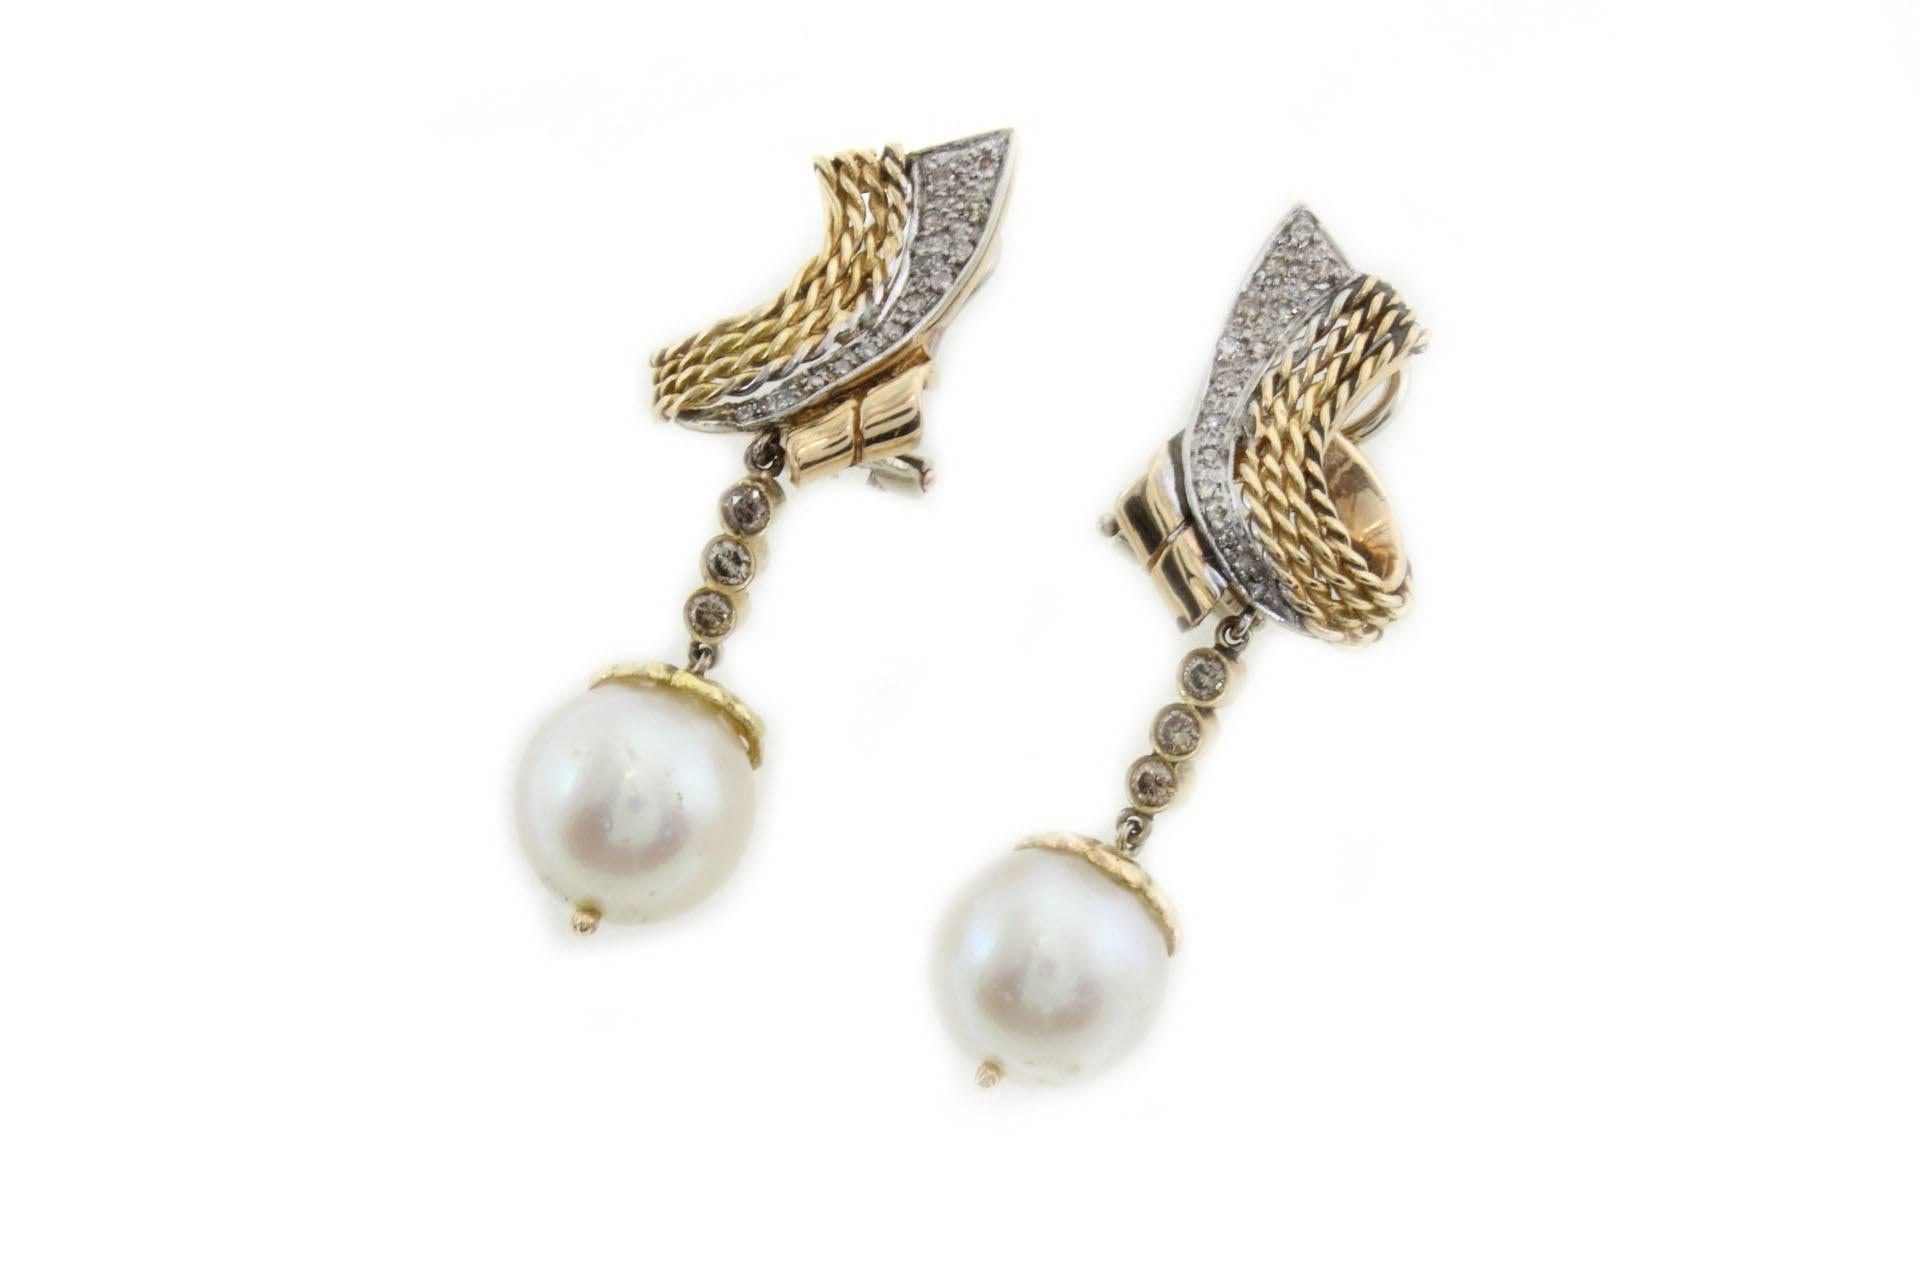 Australian Pearls earrings in 14kt  gold mounted with diamonds.
Diamonds 0.70 kt
Pearls 29.18 kt/ 1.30 cm
Tot.weight 19.90 gr
R.F fcuc